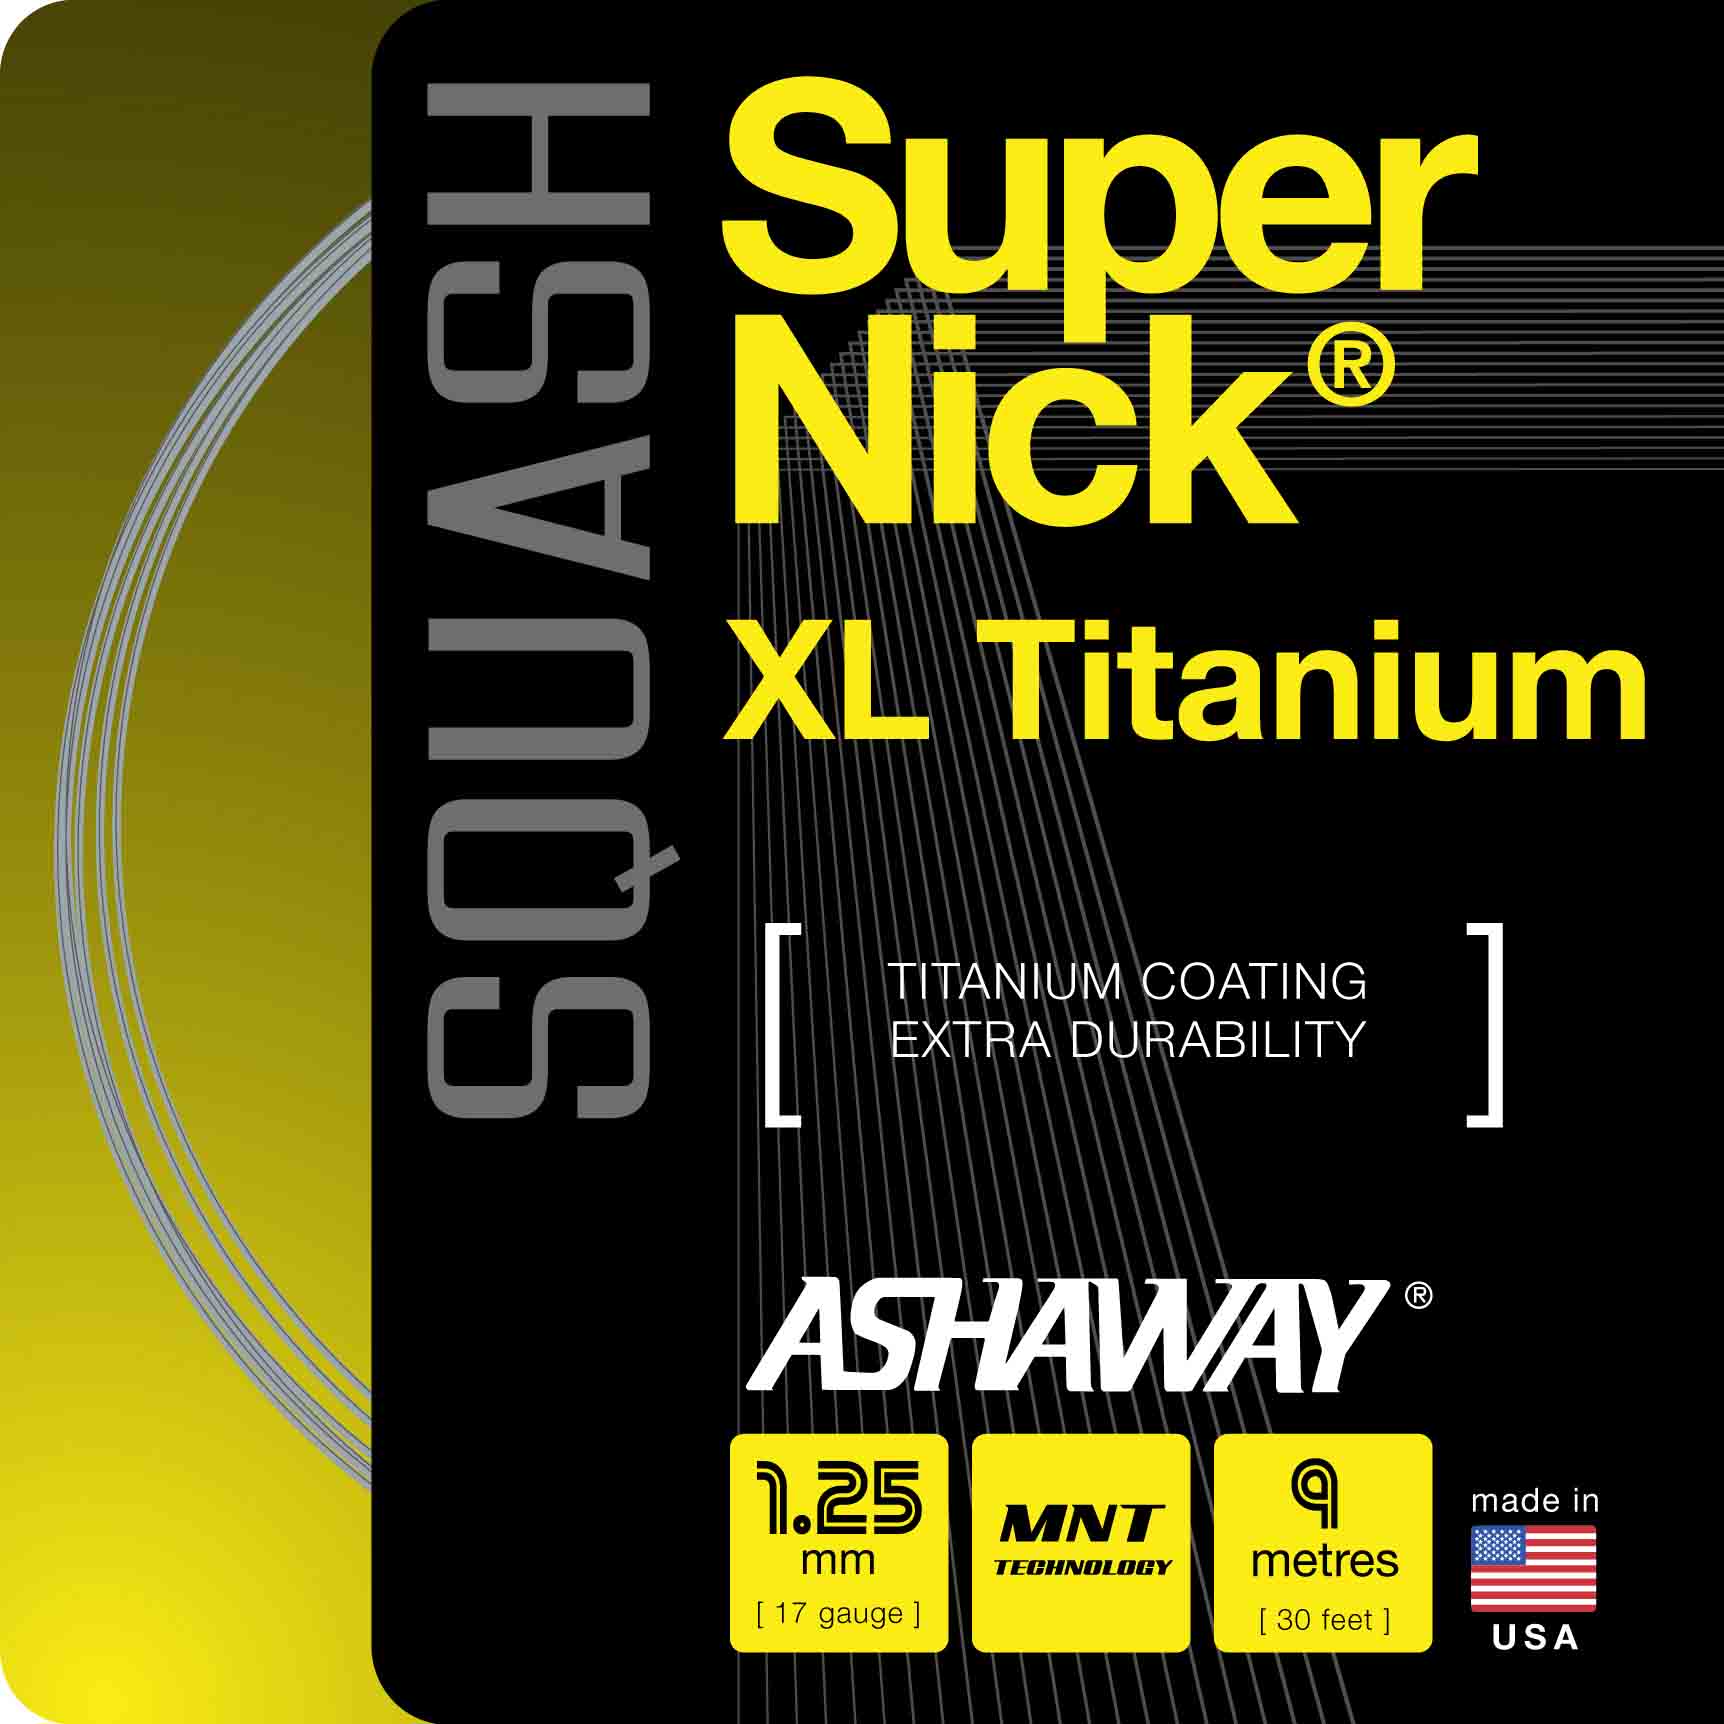 Ashaway Supernick XL Titanium Squash String - 9m set